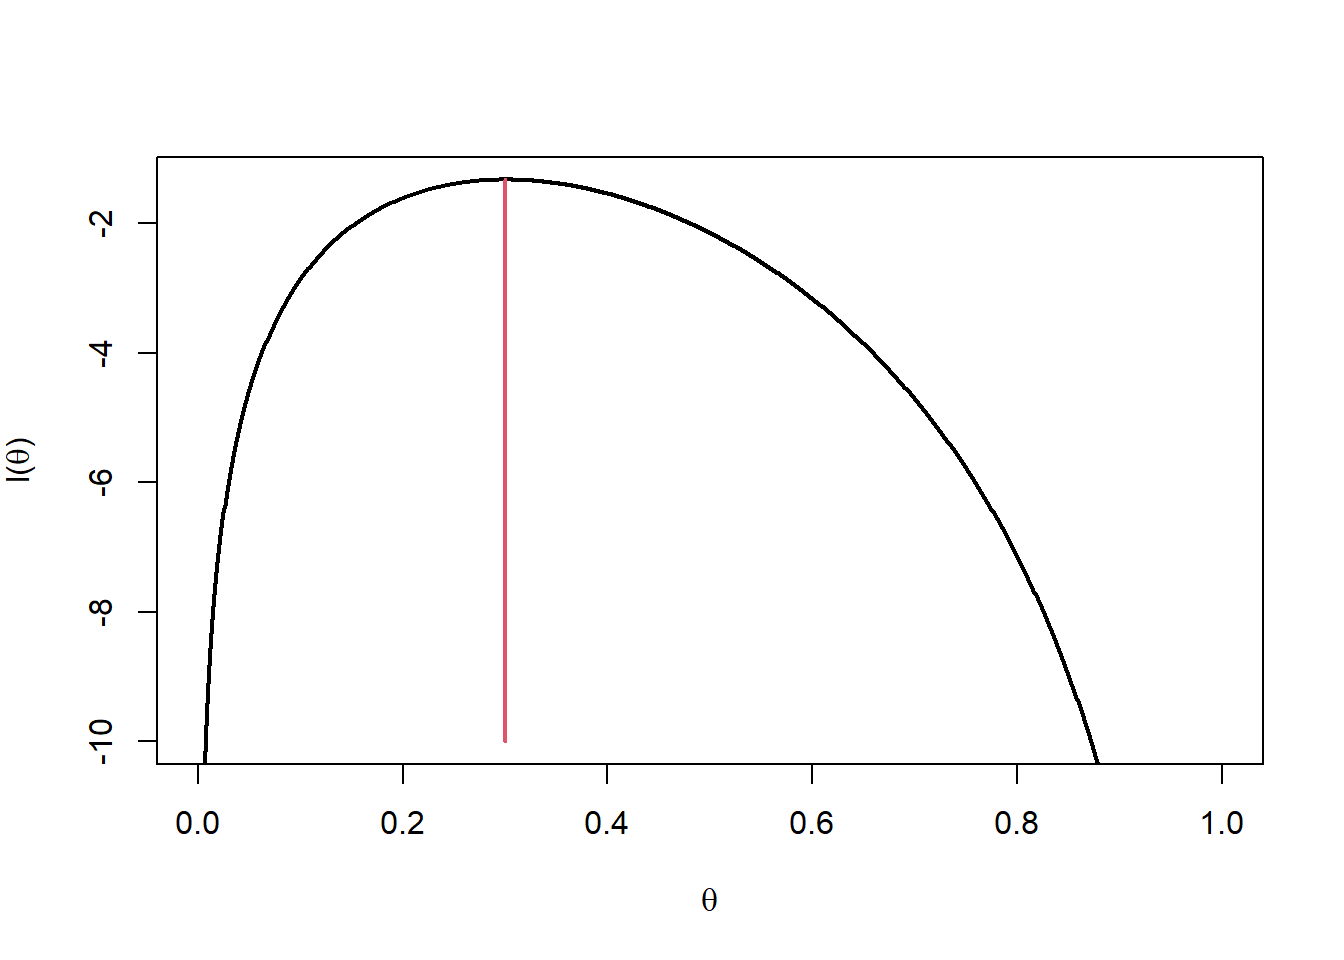 Log-likelihood function with MLE at 0.3.